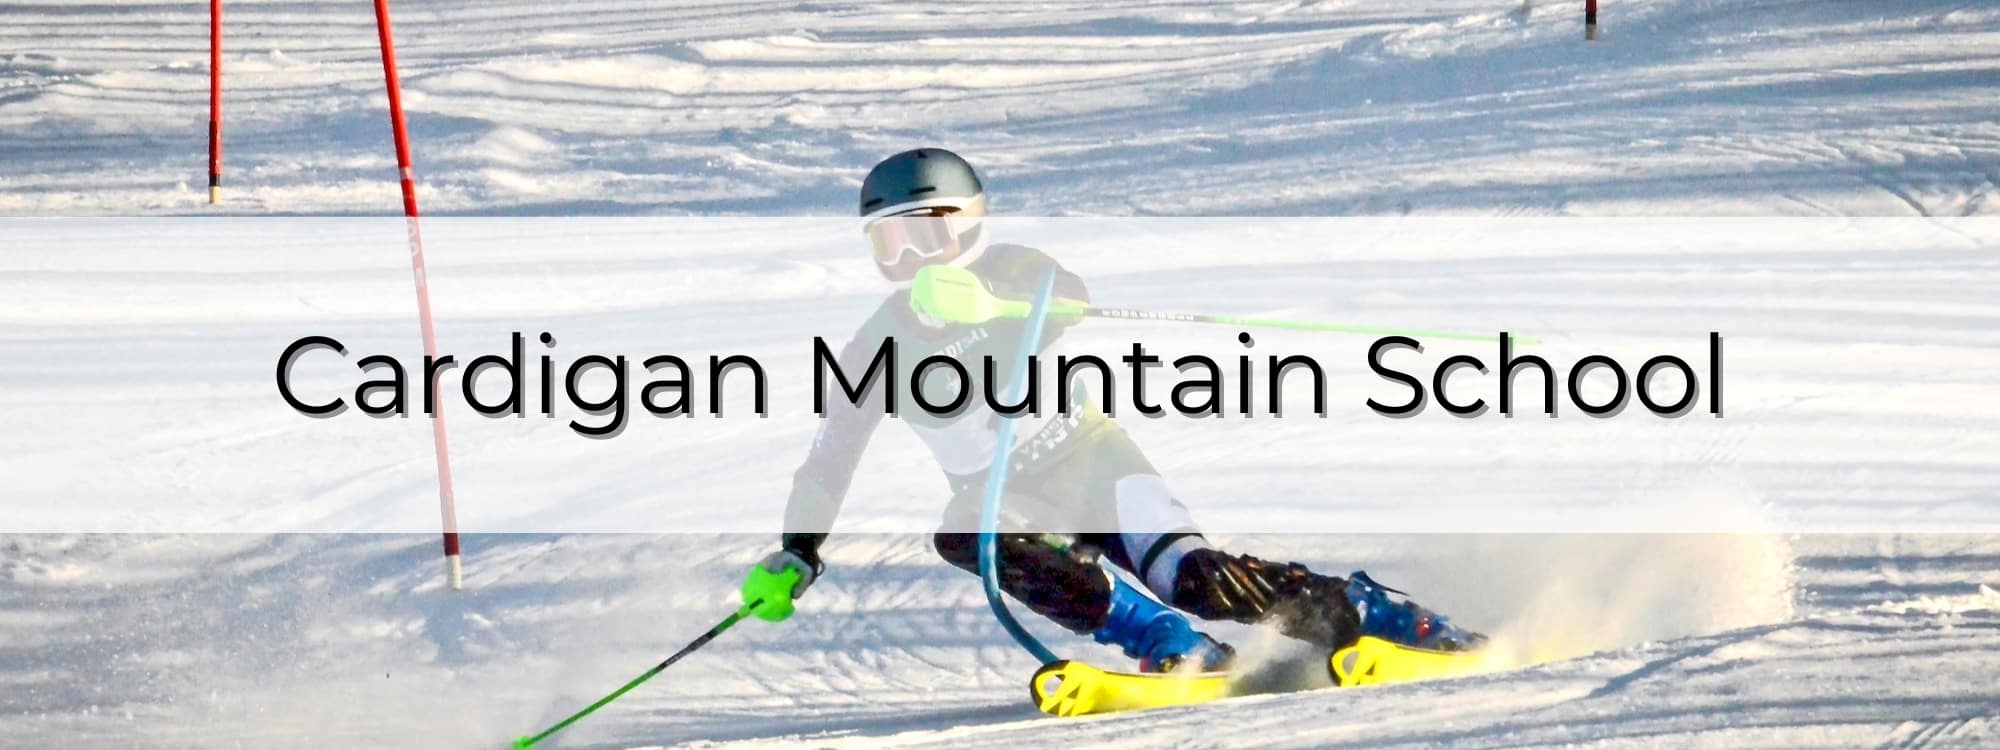 Cardigan Mountain School ski racer. Banner Title.